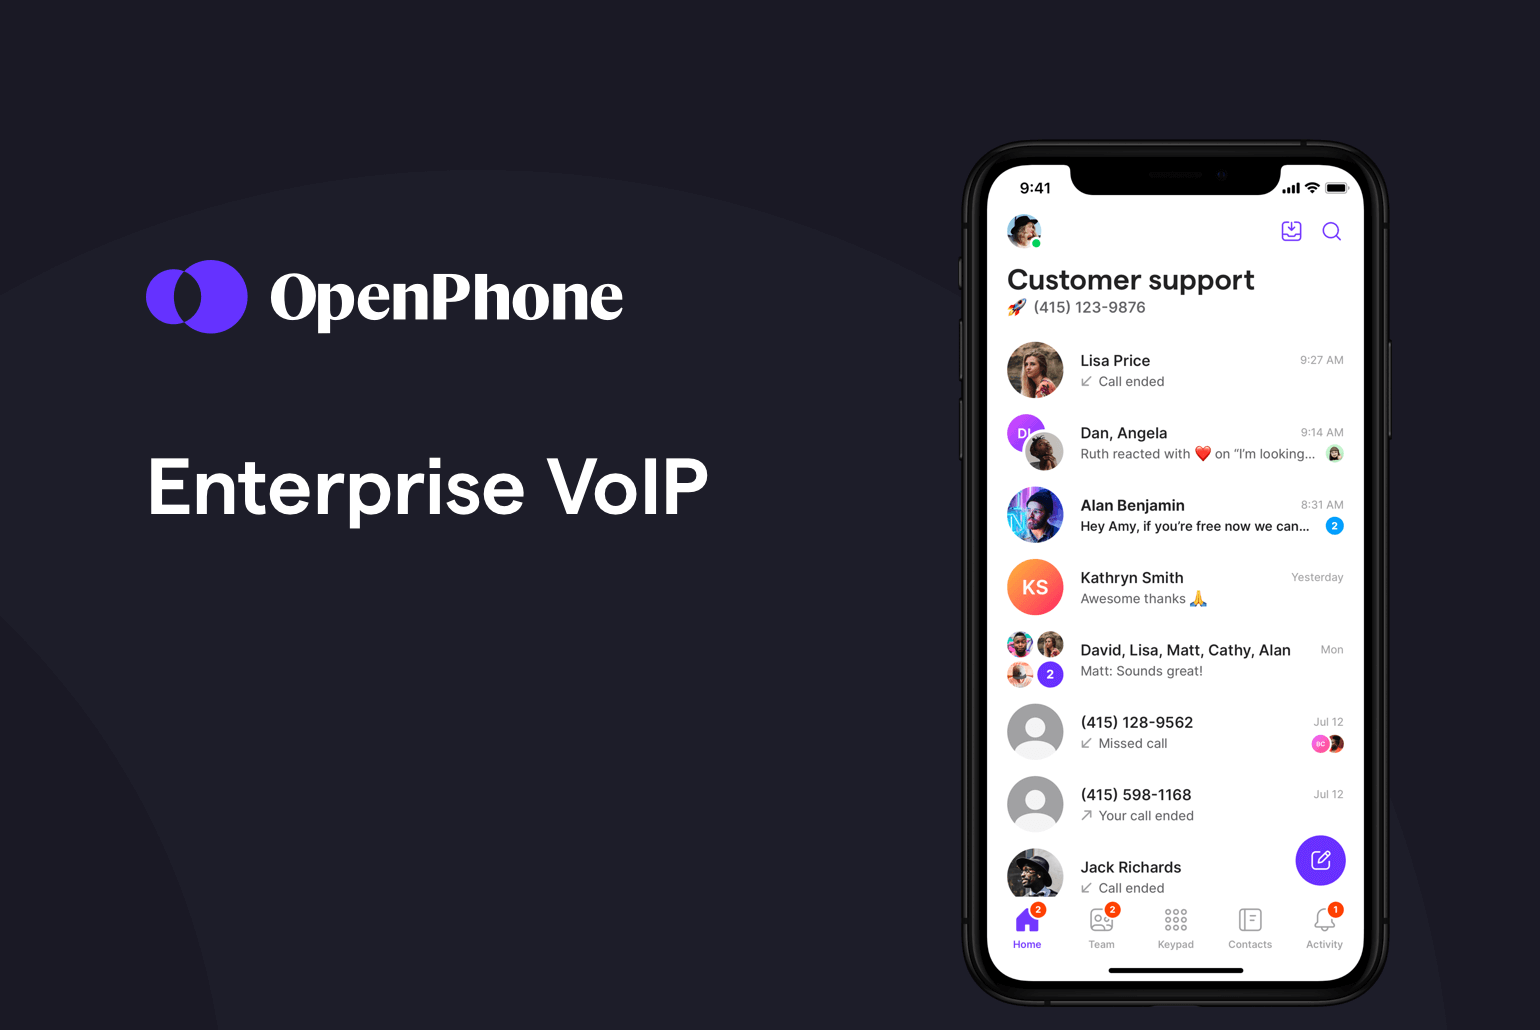 enterprise VoIP by OpenPhone